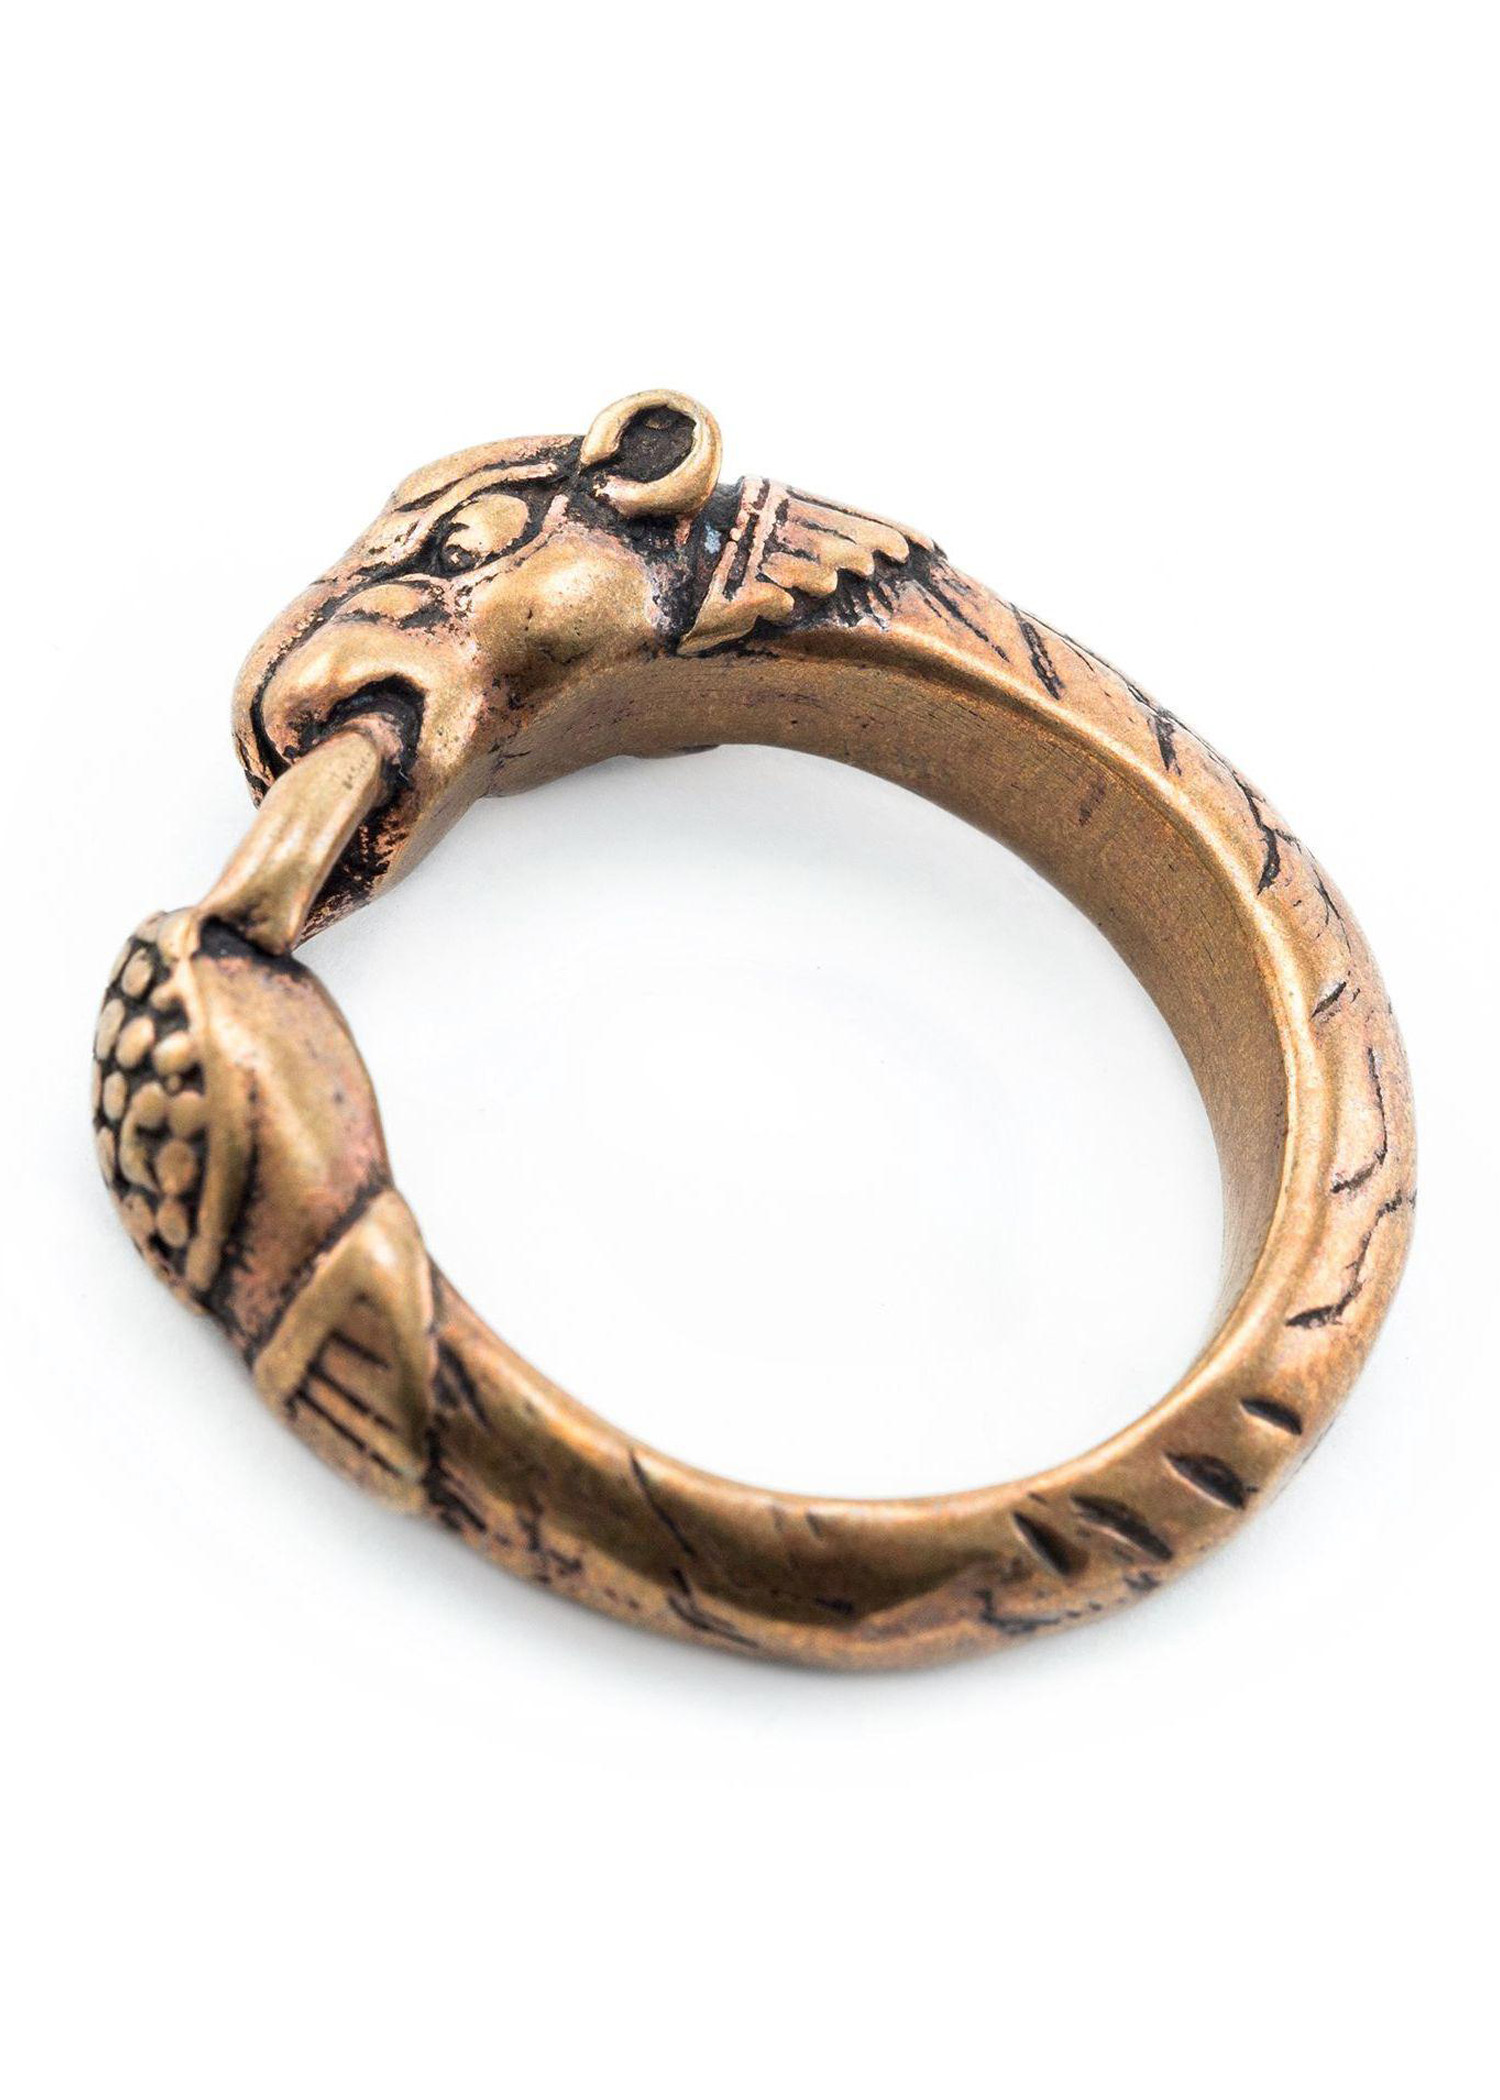 Wikinger Ring mit Hundekopf, Bronze, Ringgröße 22/70